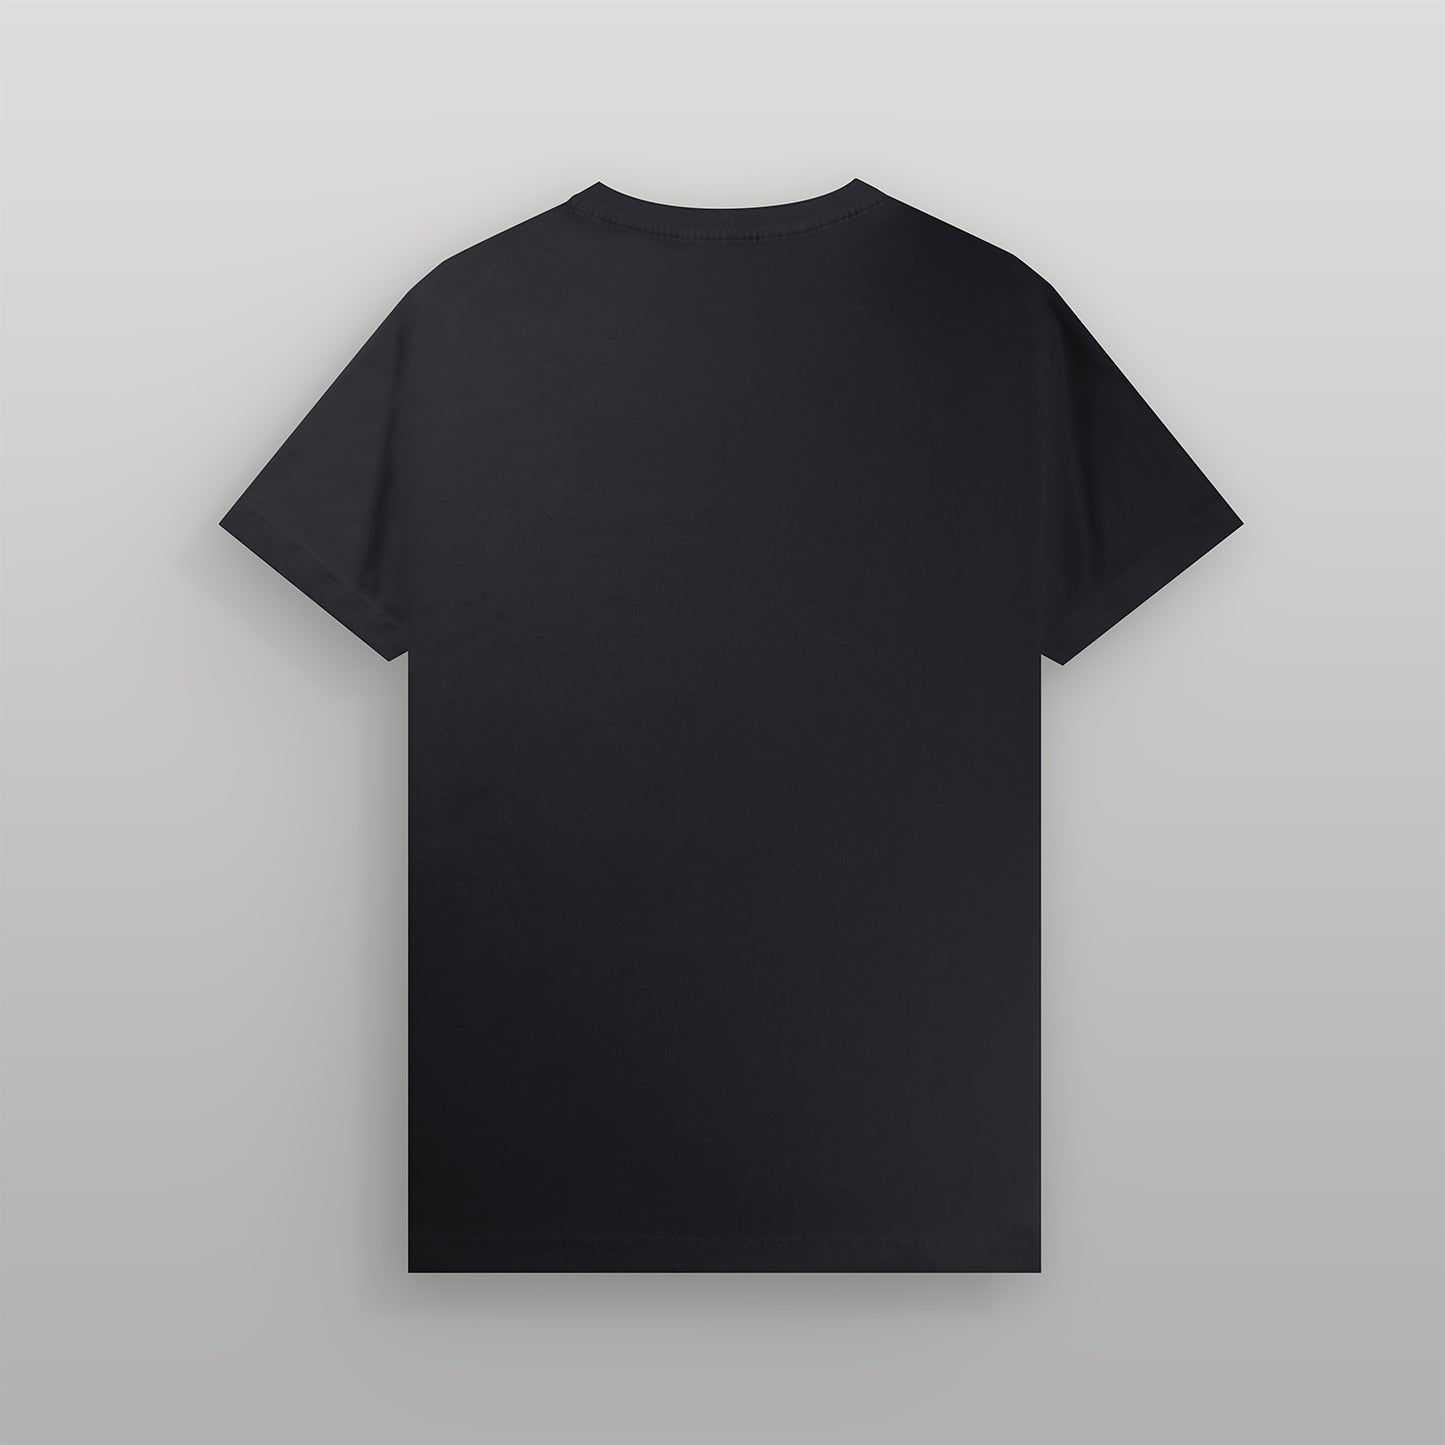 Gilbert x Gelato Black T-shirt